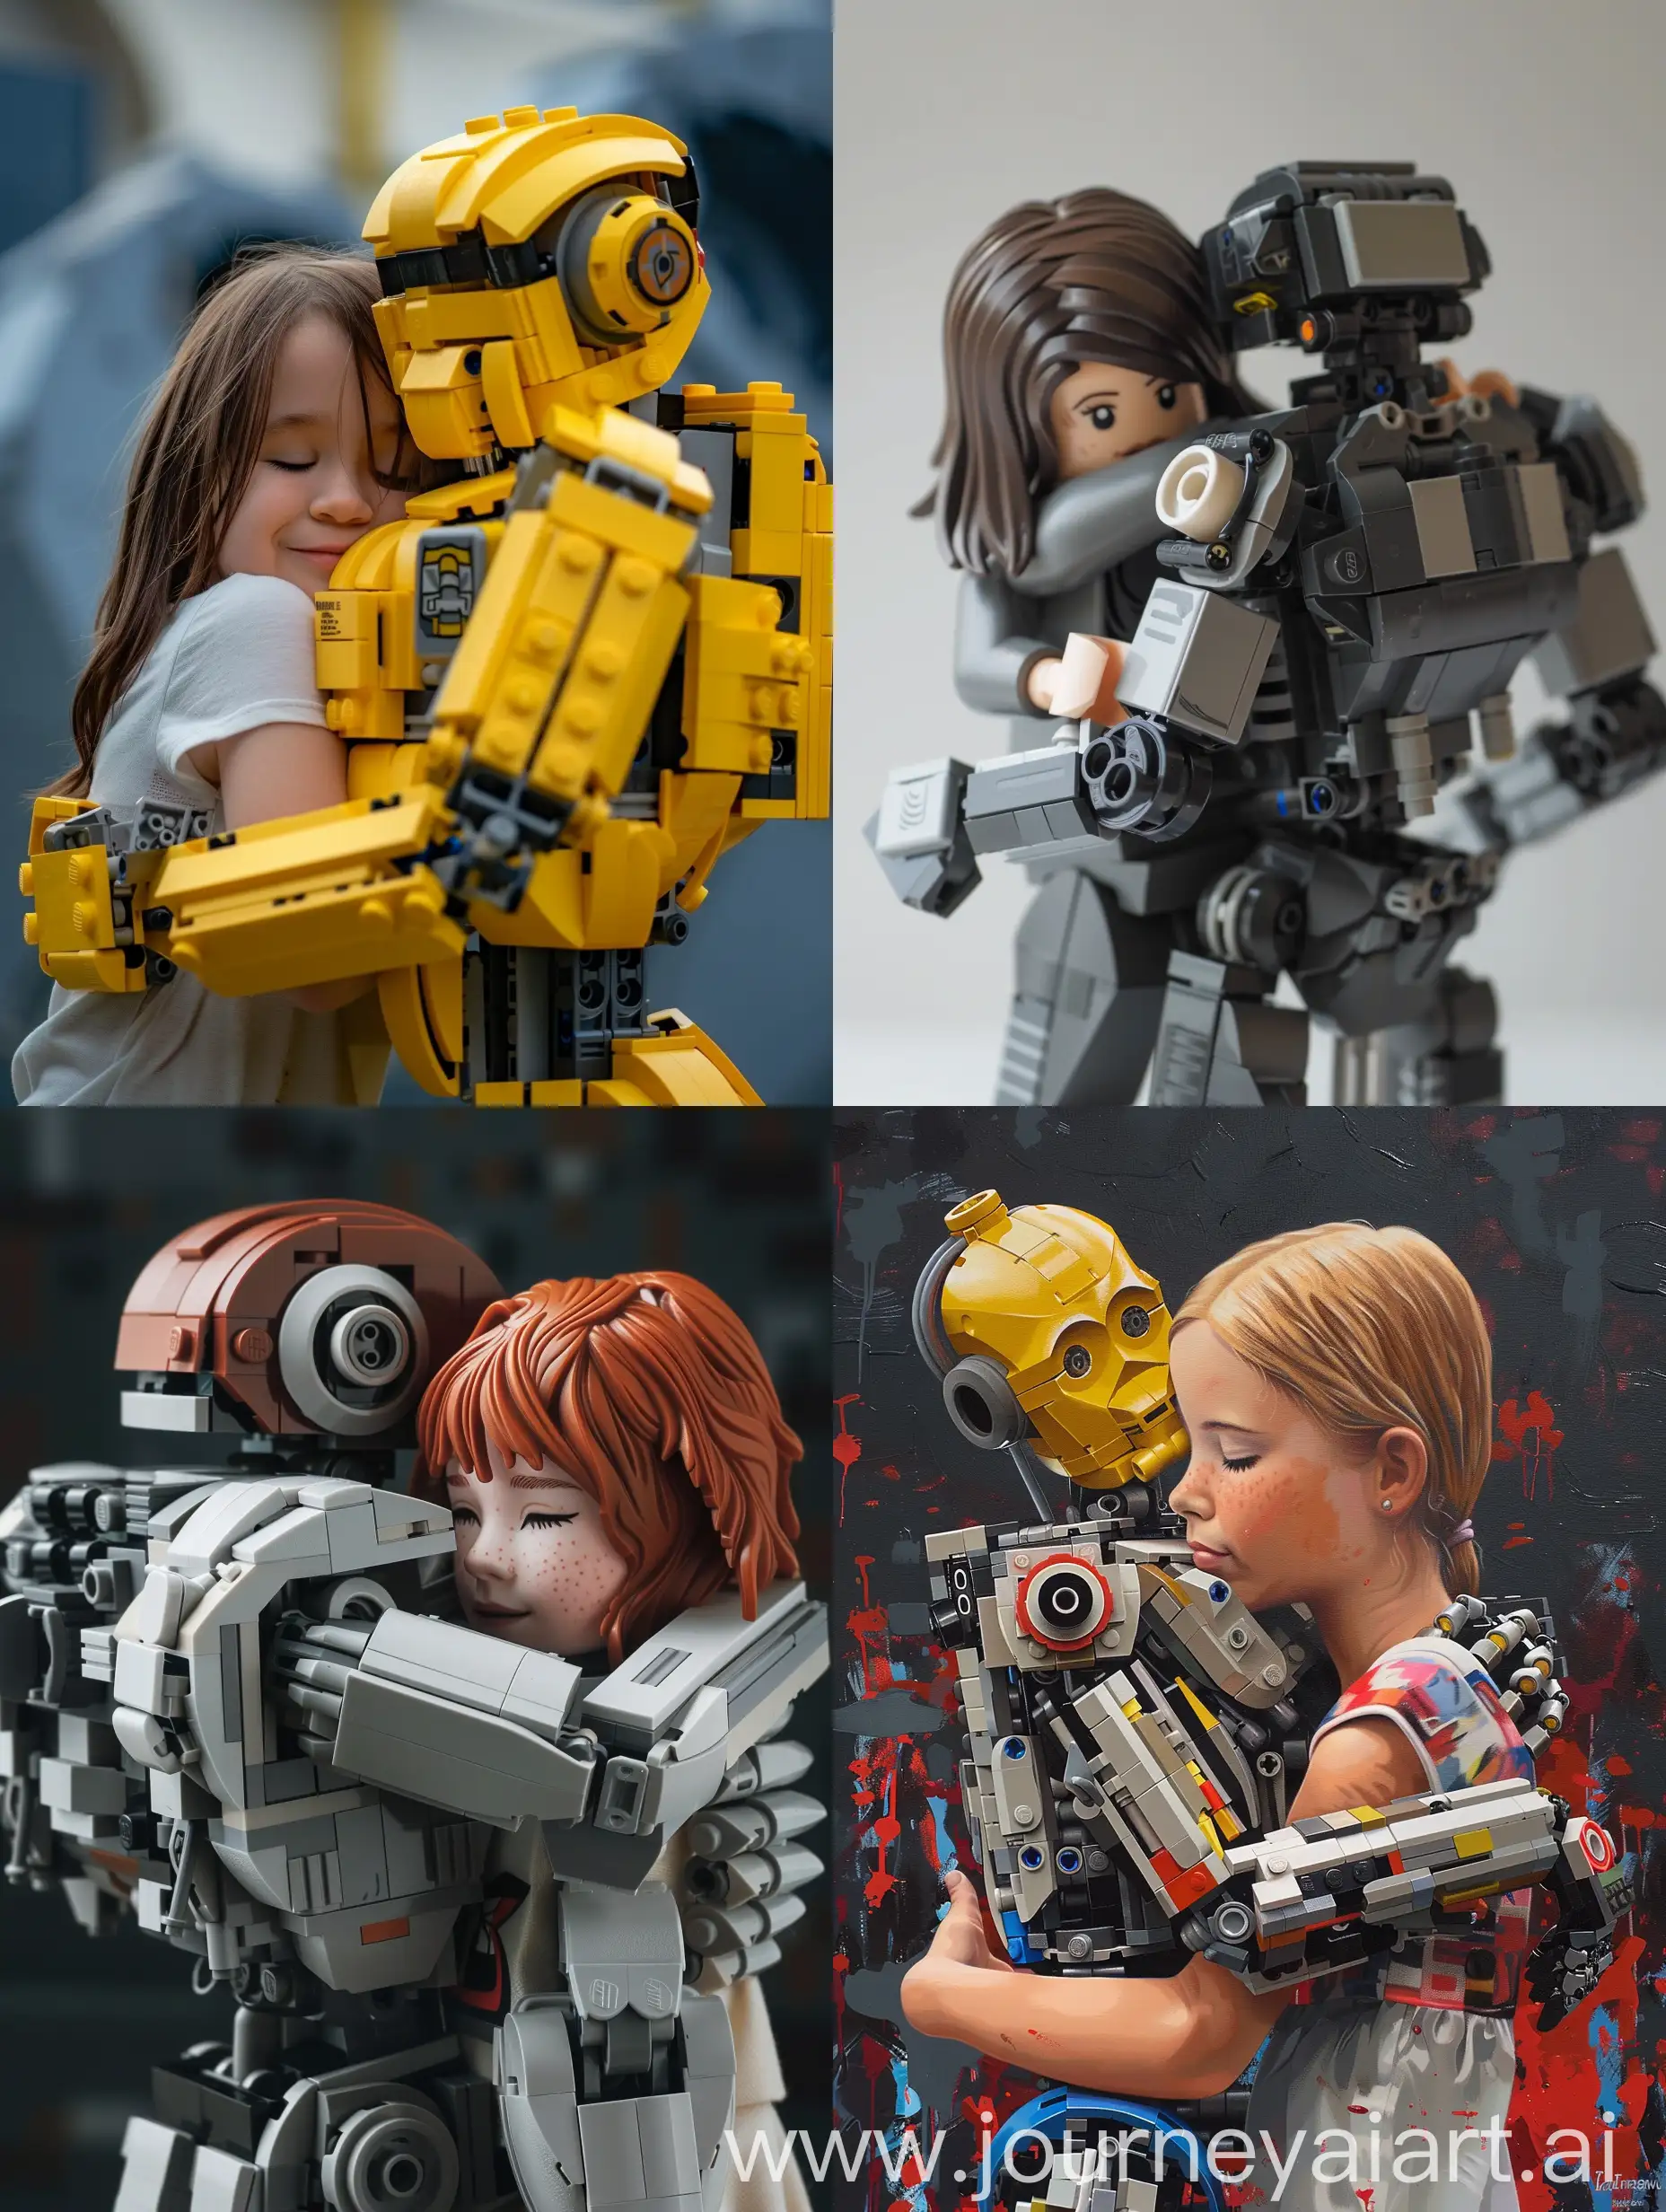 Girl-Hugs-Robot-Heartwarming-Moment-with-LEGO-Creation